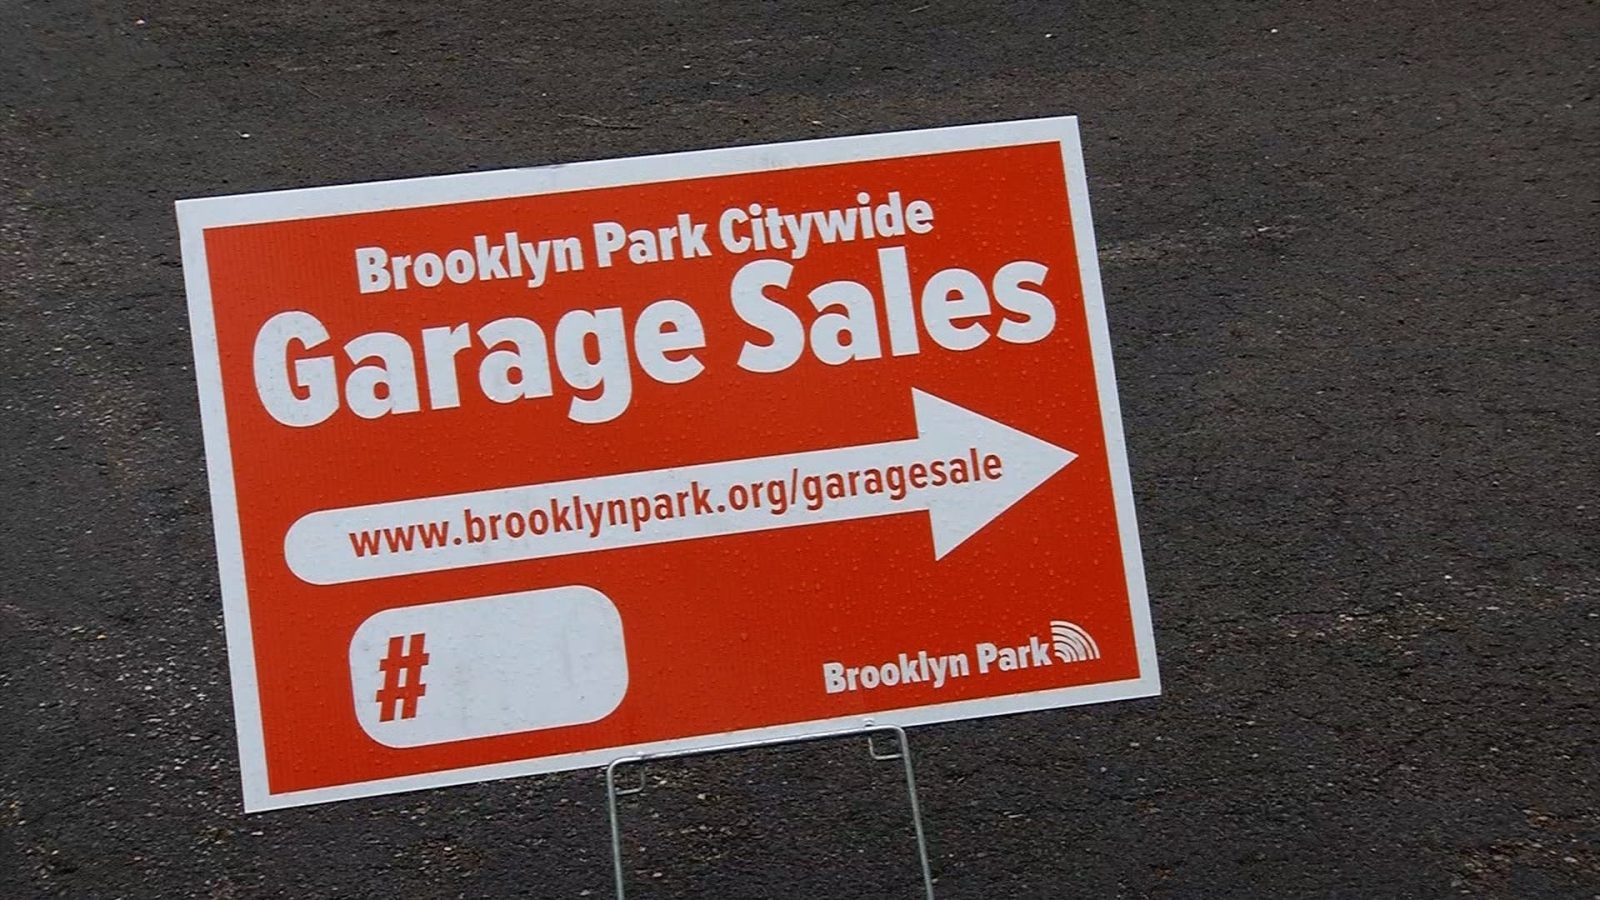 Brooklyn Park garage sales signs